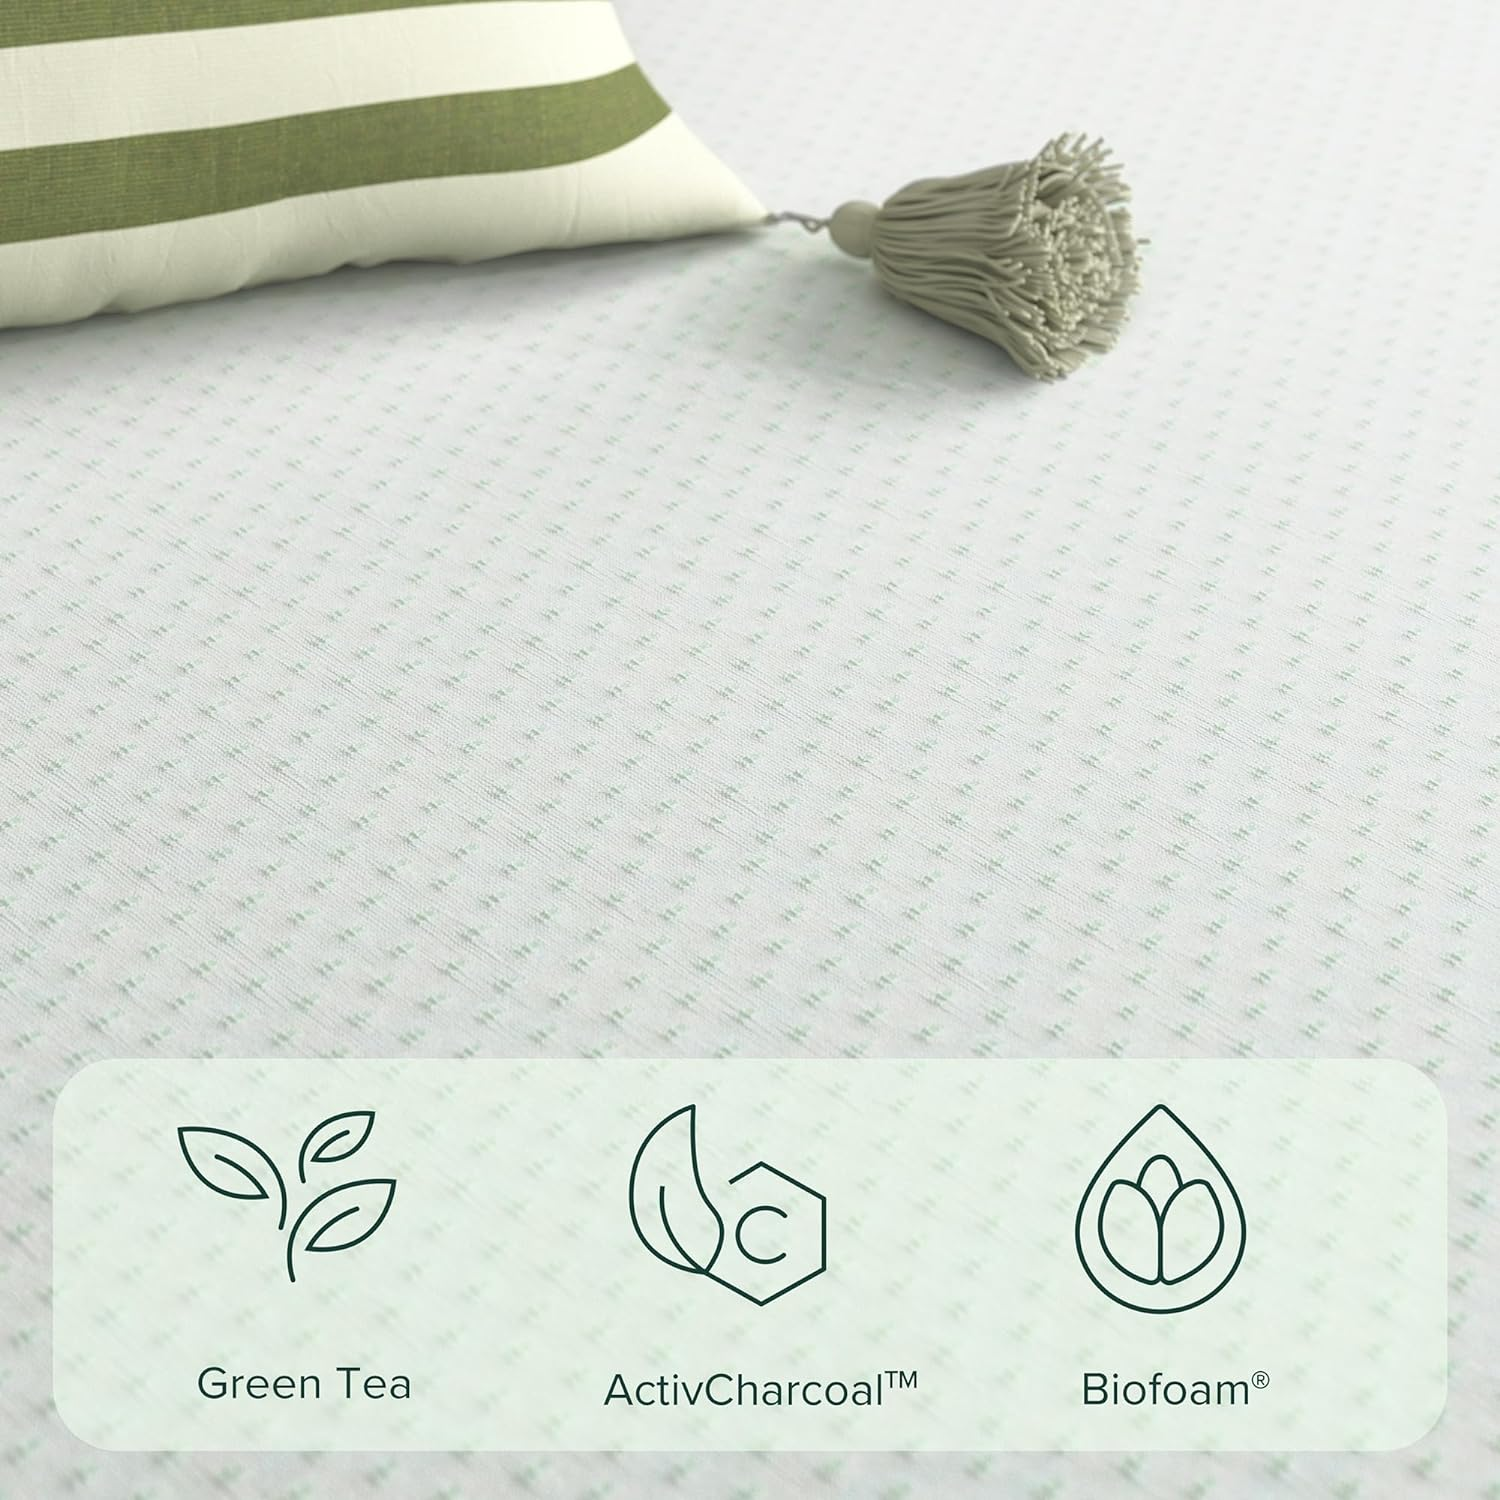 Green Tea 10” Cushioned Firm Memory Foam Mattress